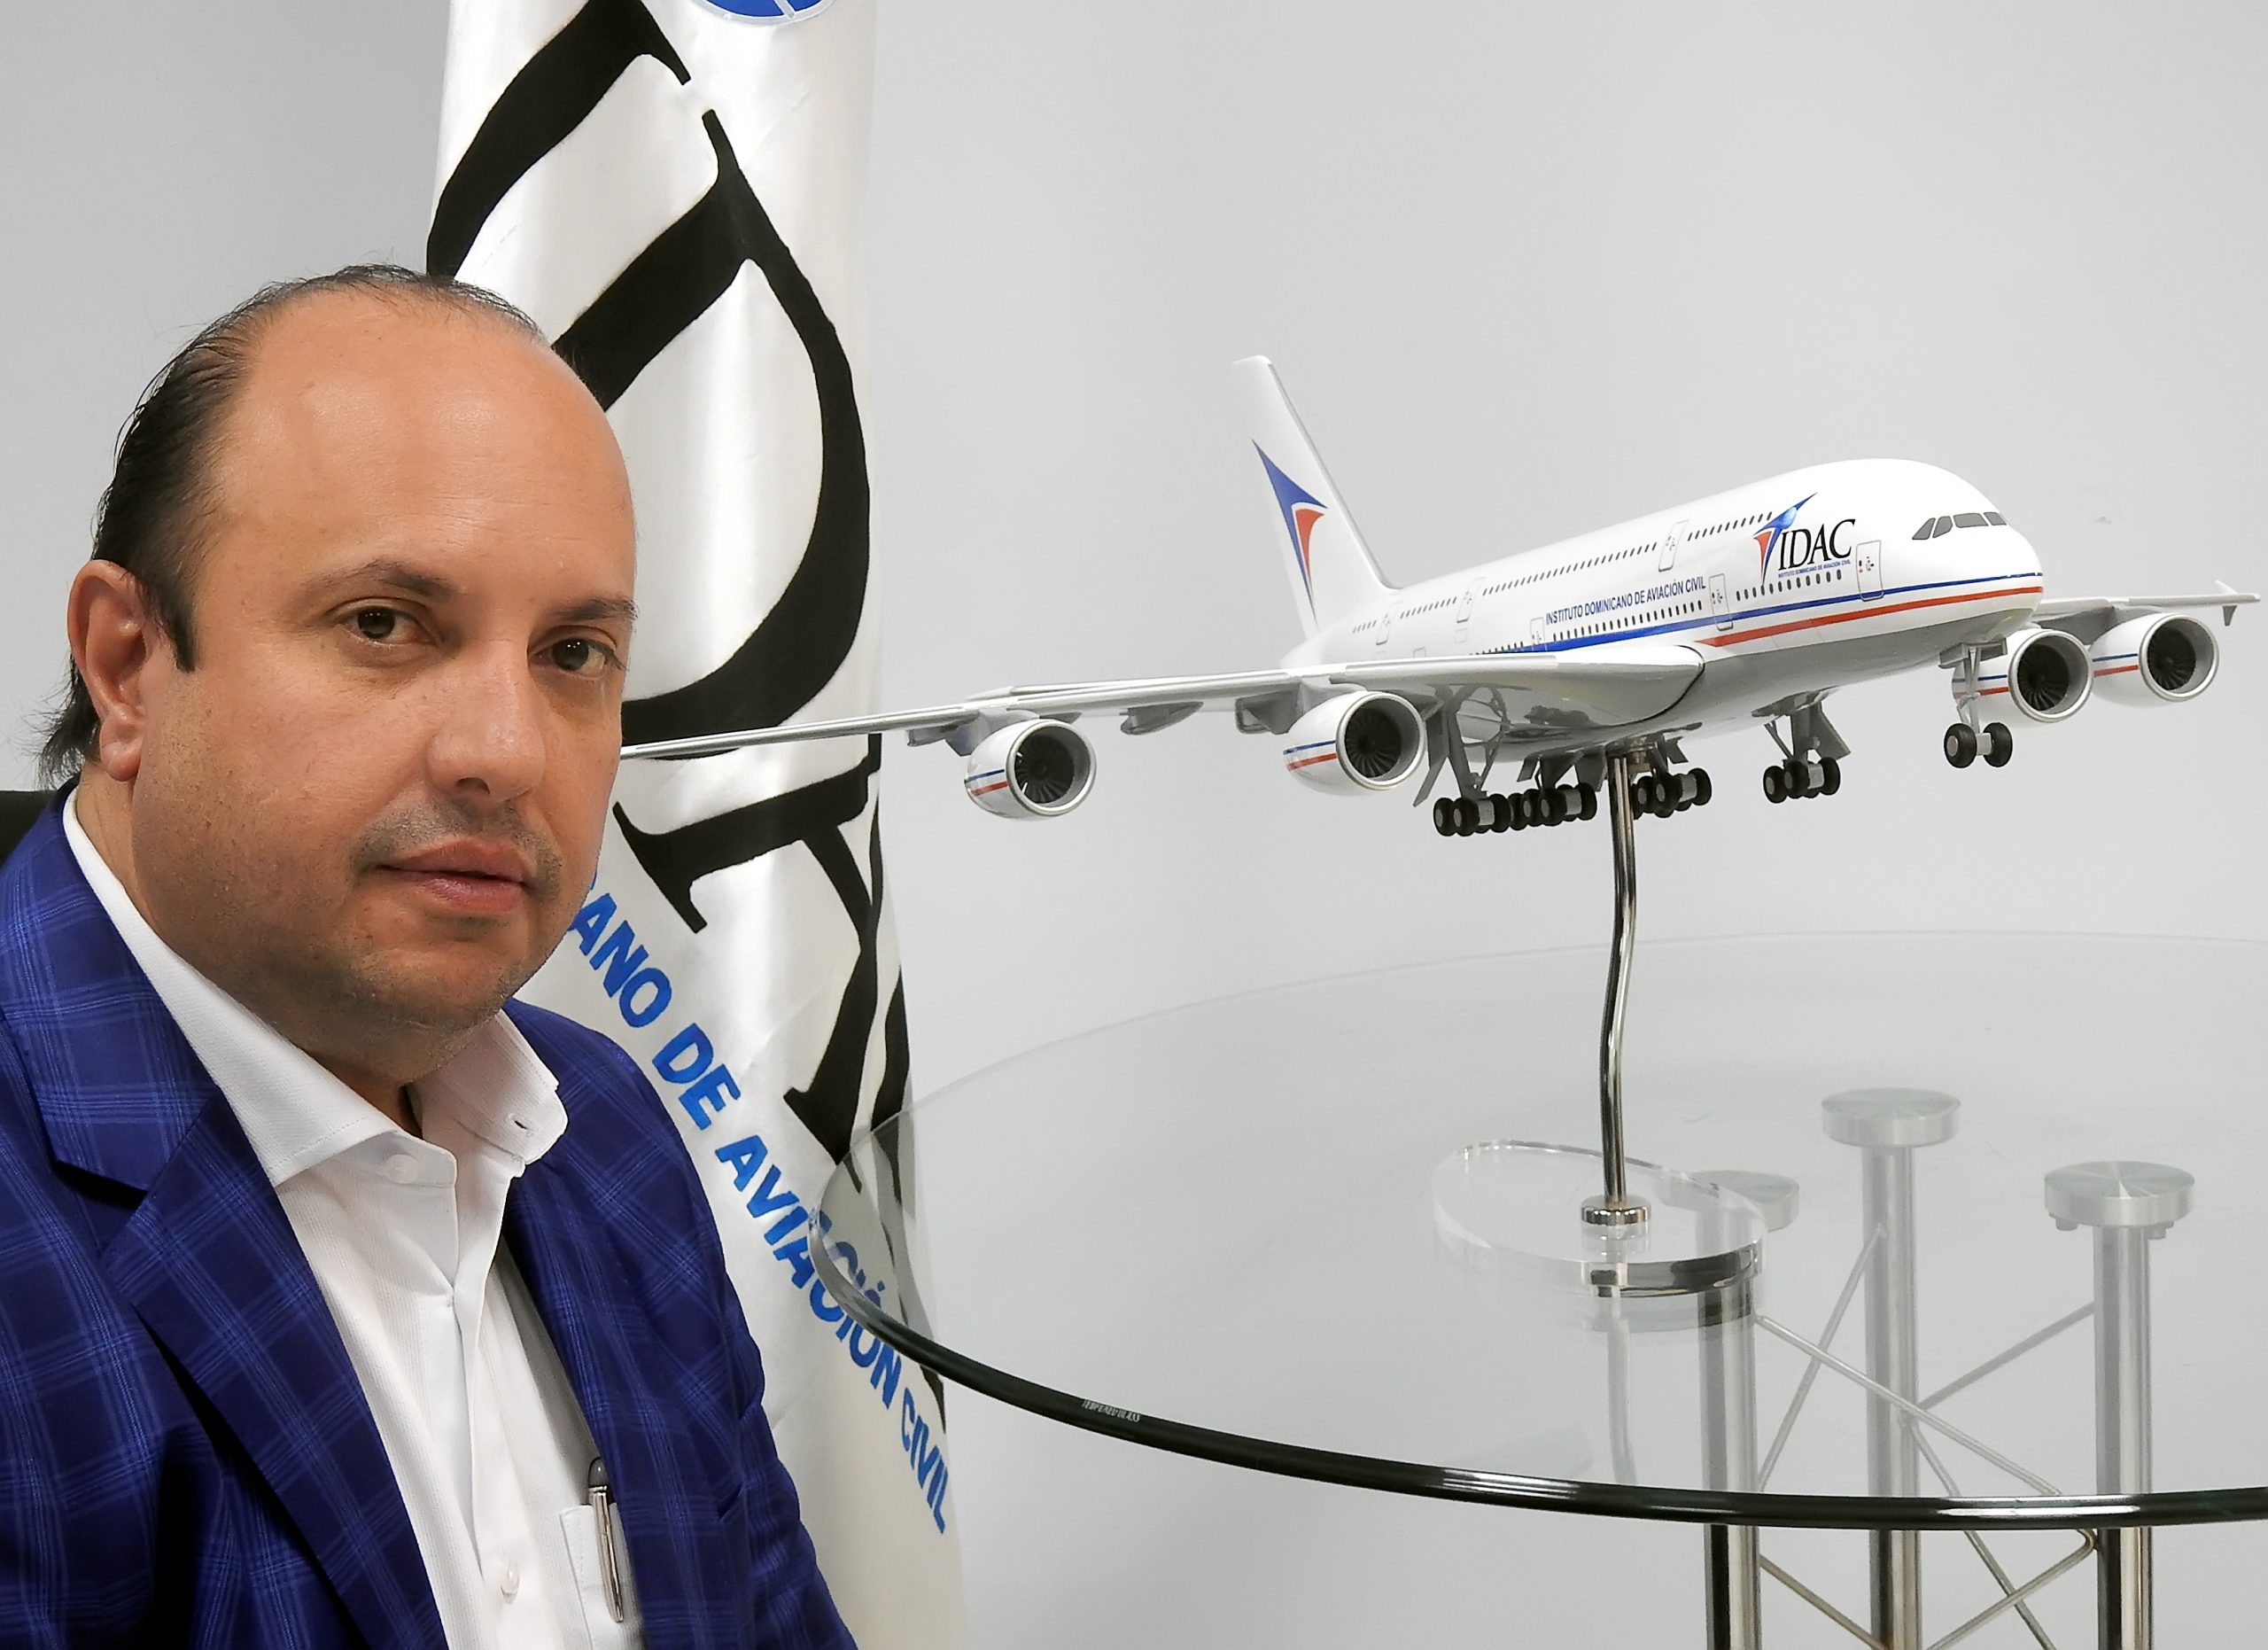 Director IDAC destaca esfuerzos por atraer turismo aviación privada